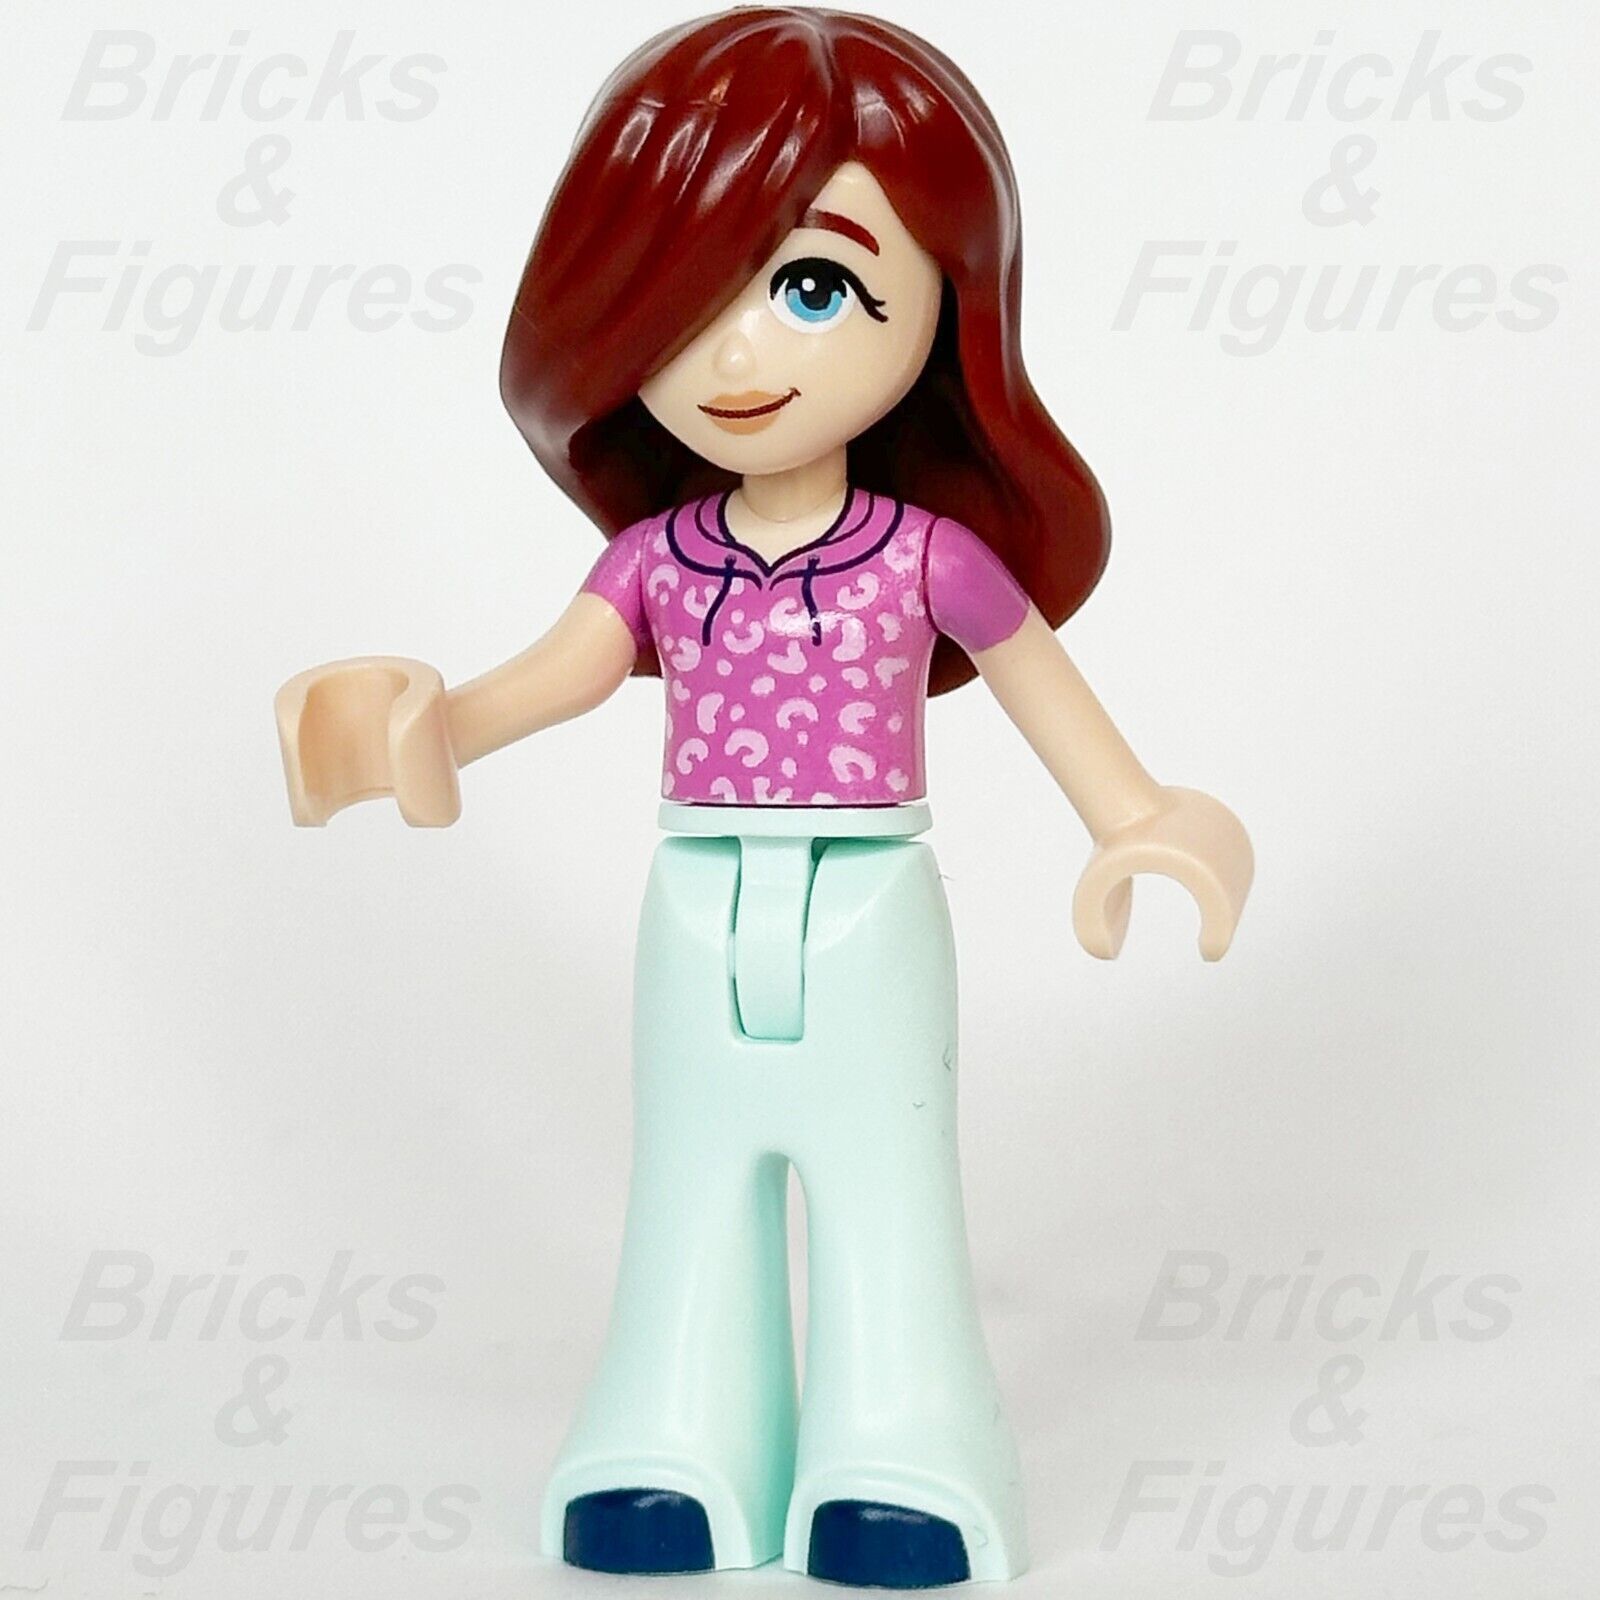 LEGO Friends Paisley Minifigure Pink Hoodie Blue Shoes Minifig 41735 frnd582 - Bricks & Figures